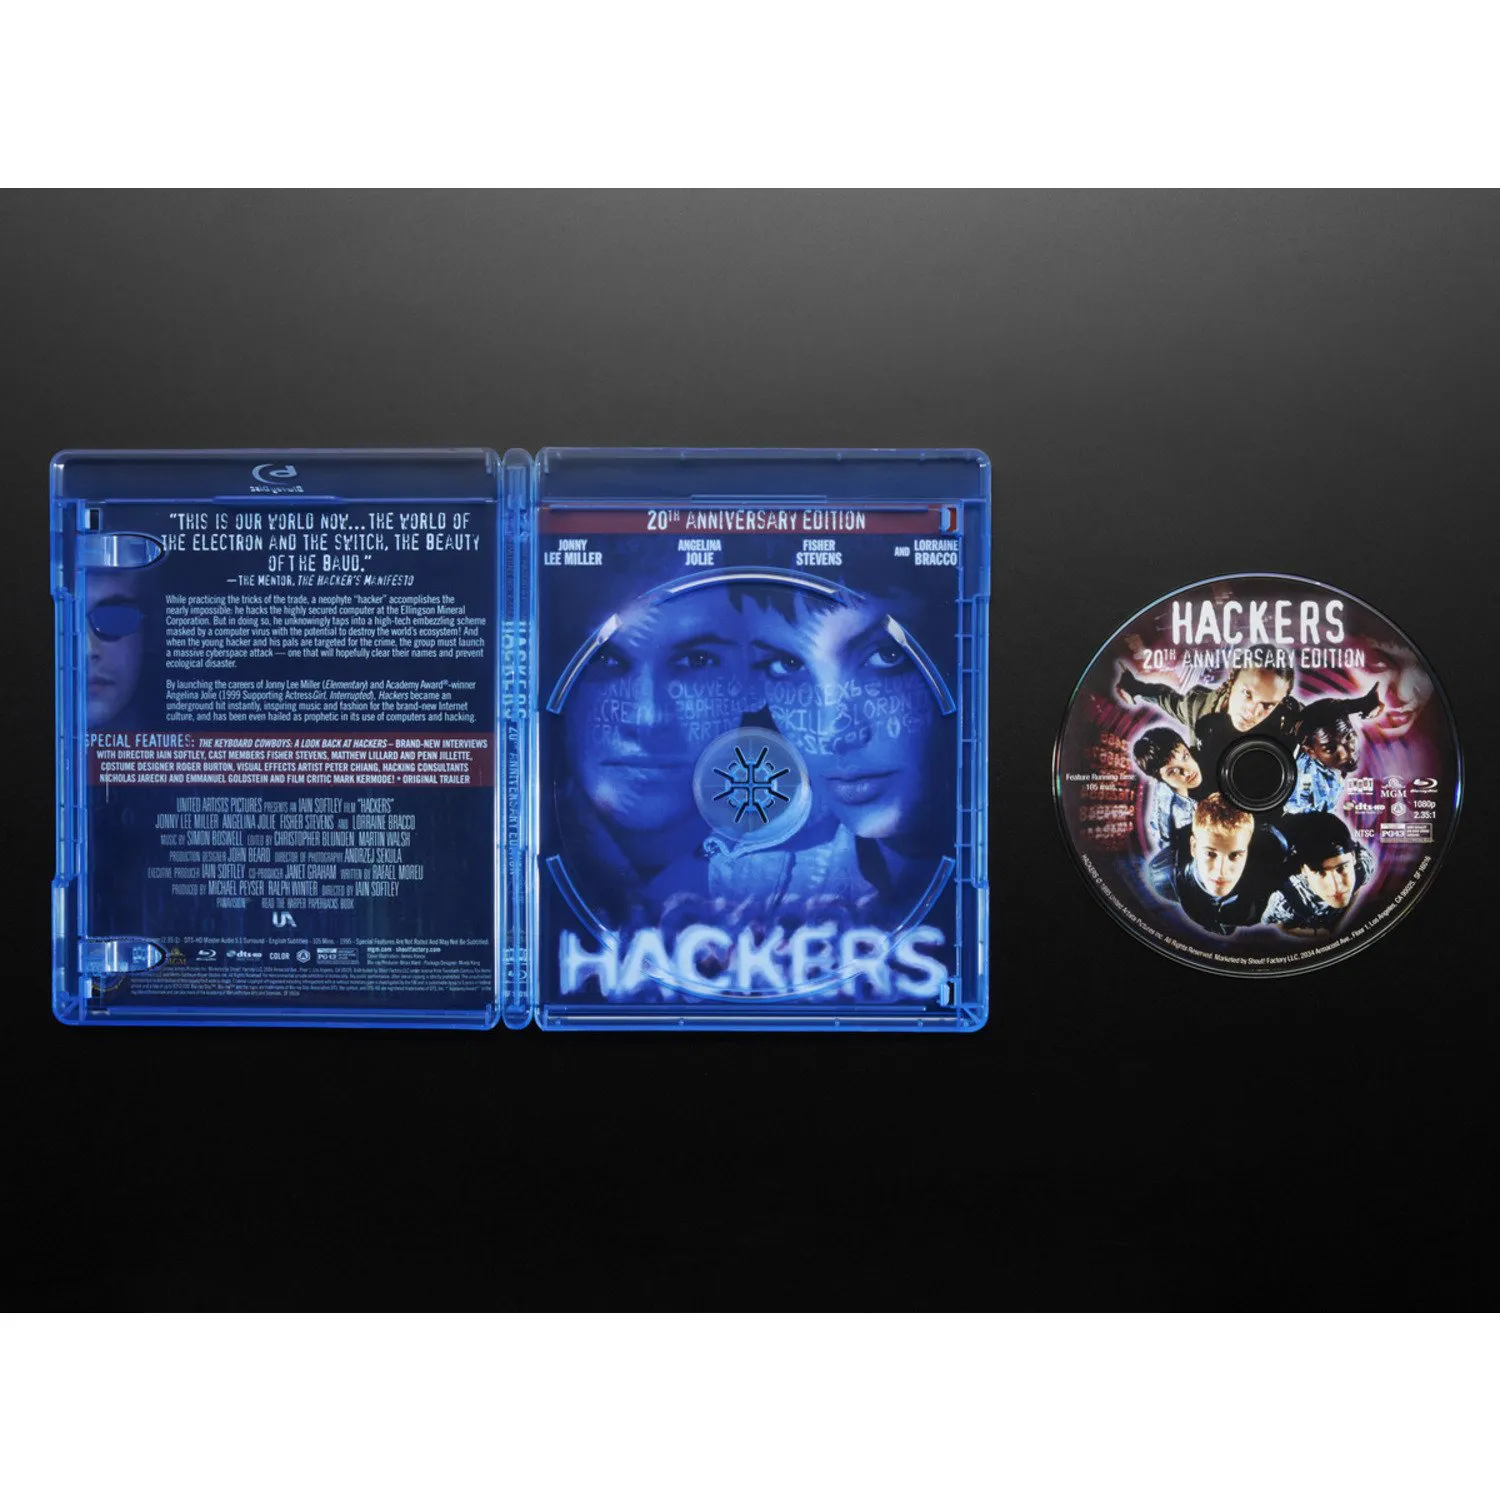 Photo of Hackers Blu-ray - 20th anniversary edition